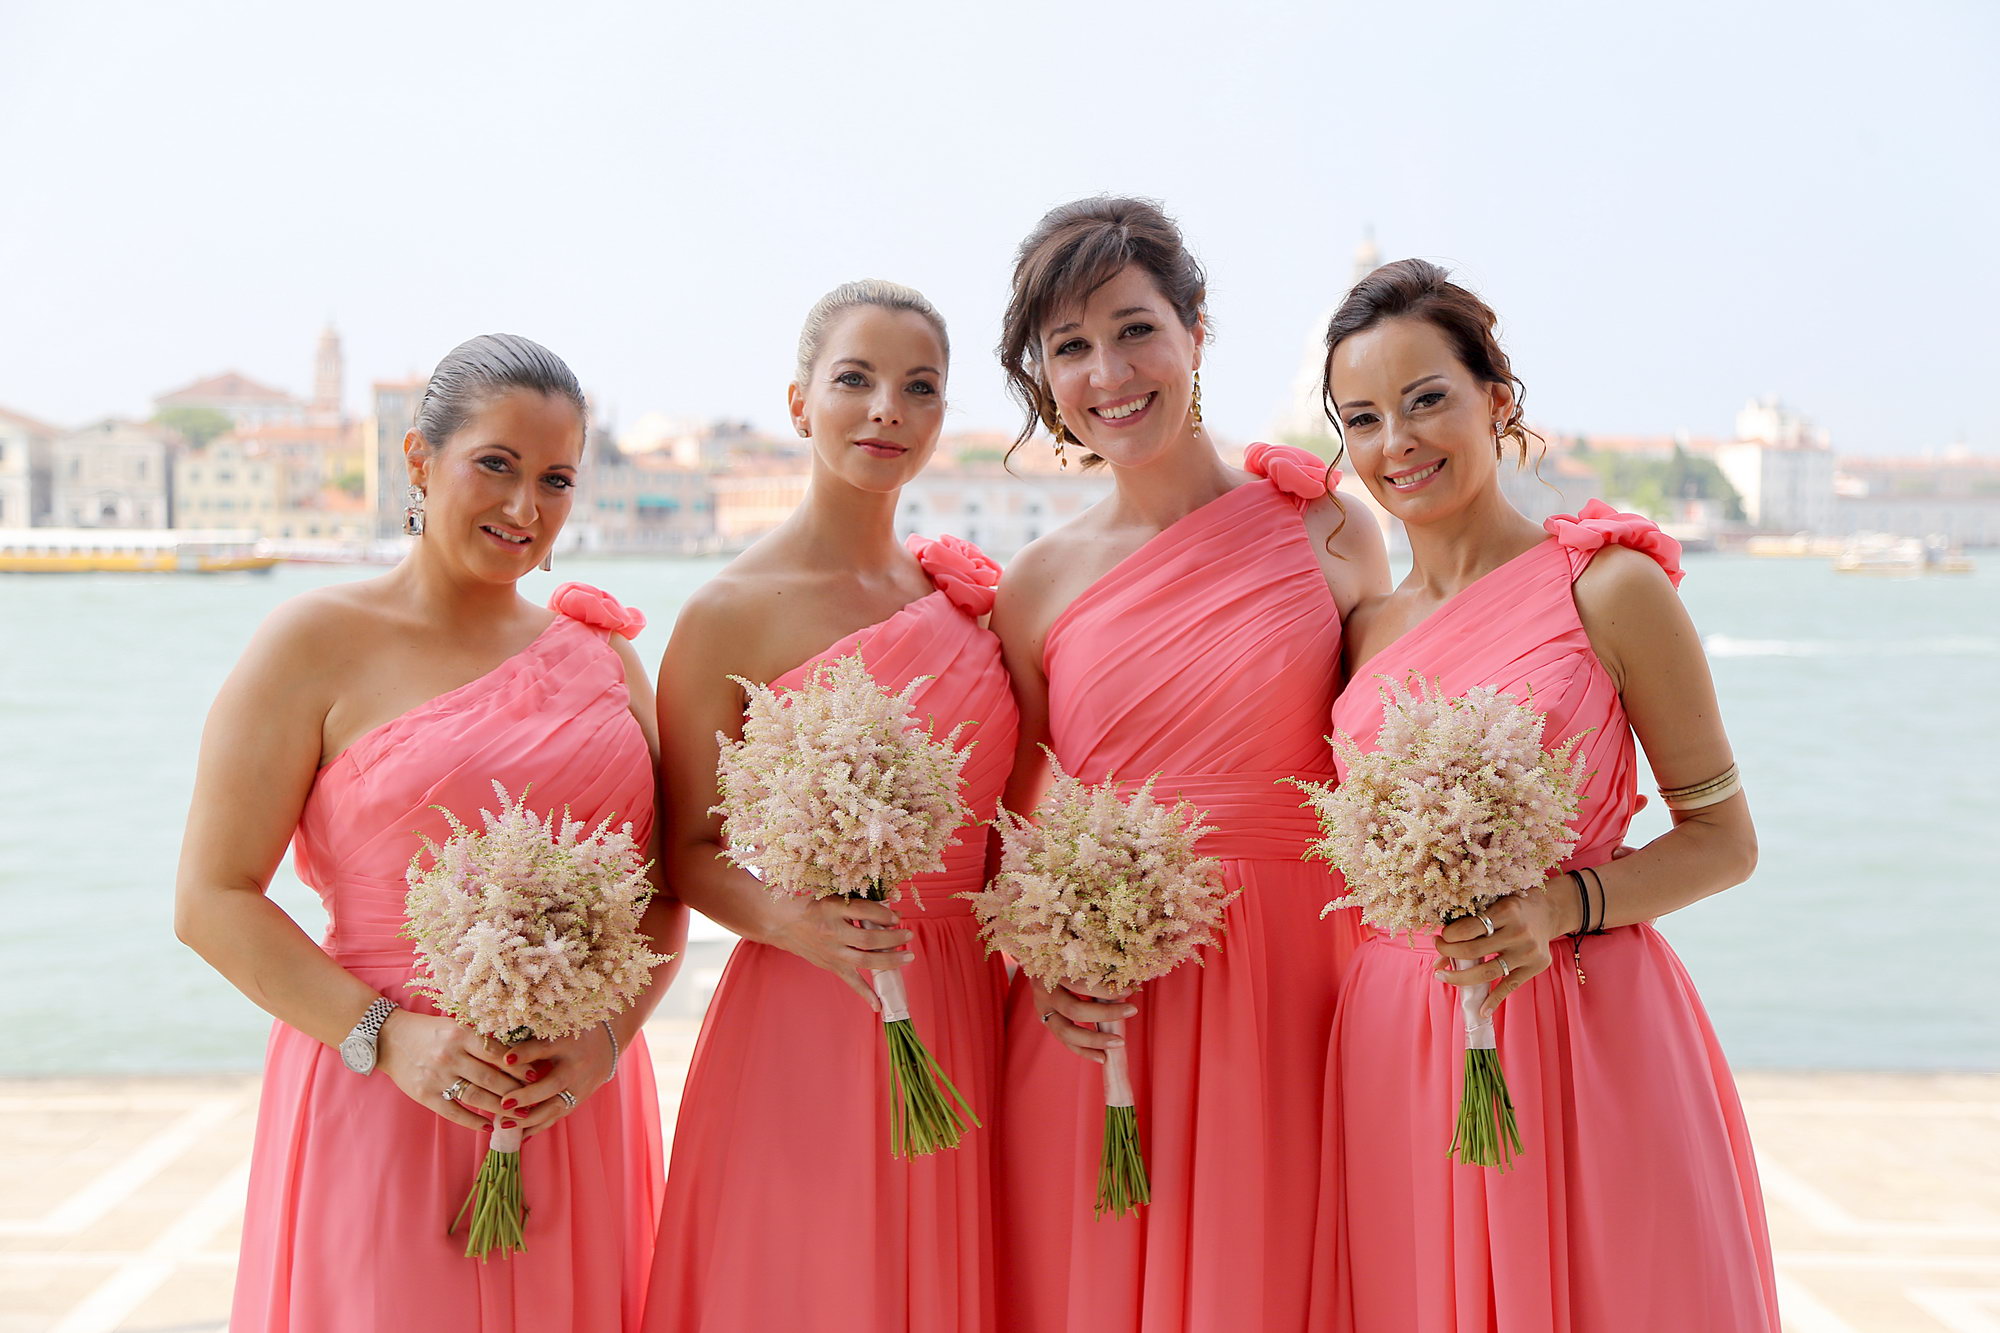 ..imagesweddings englamorous wedding in venice isola delle rose photographer italy_08 by Photo27